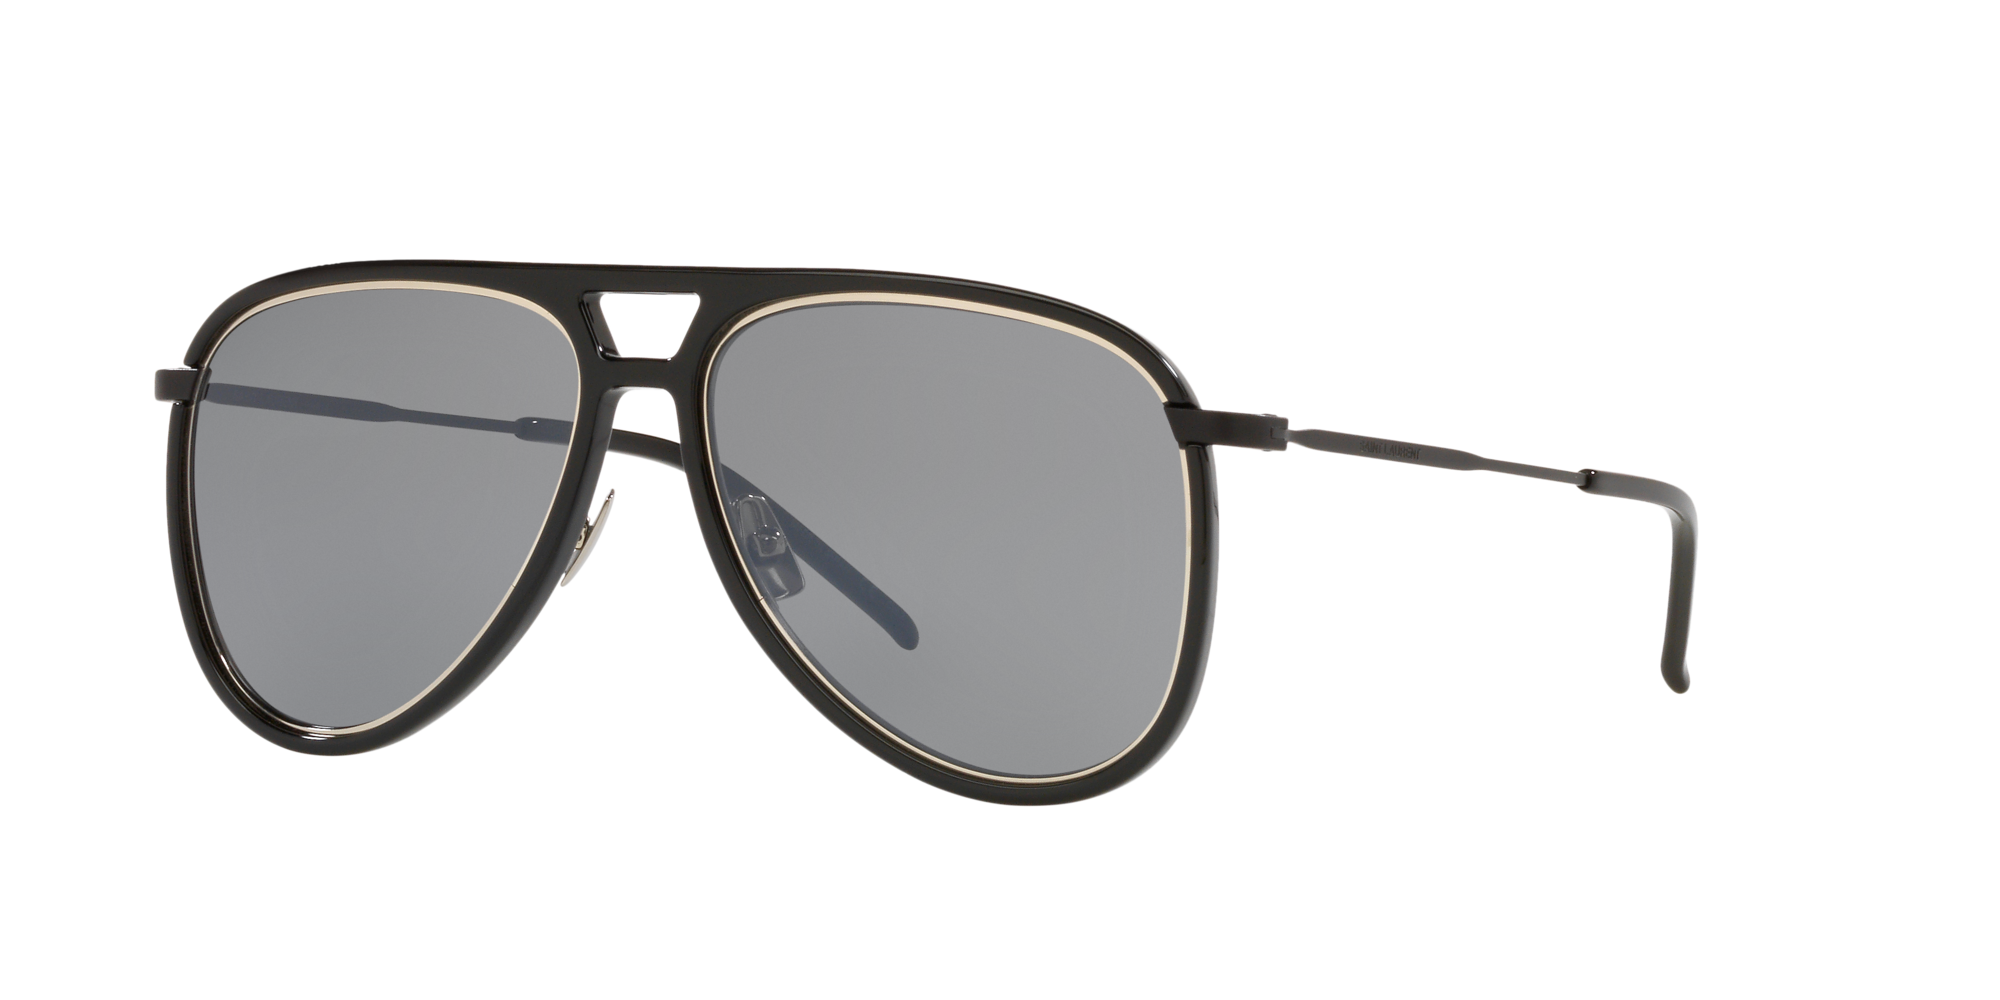 NEW Saint Laurent Classic SL 11M 005 Aviator Sunglasses | Aviator sunglasses,  Classic aviator sunglasses, Colored sunglasses